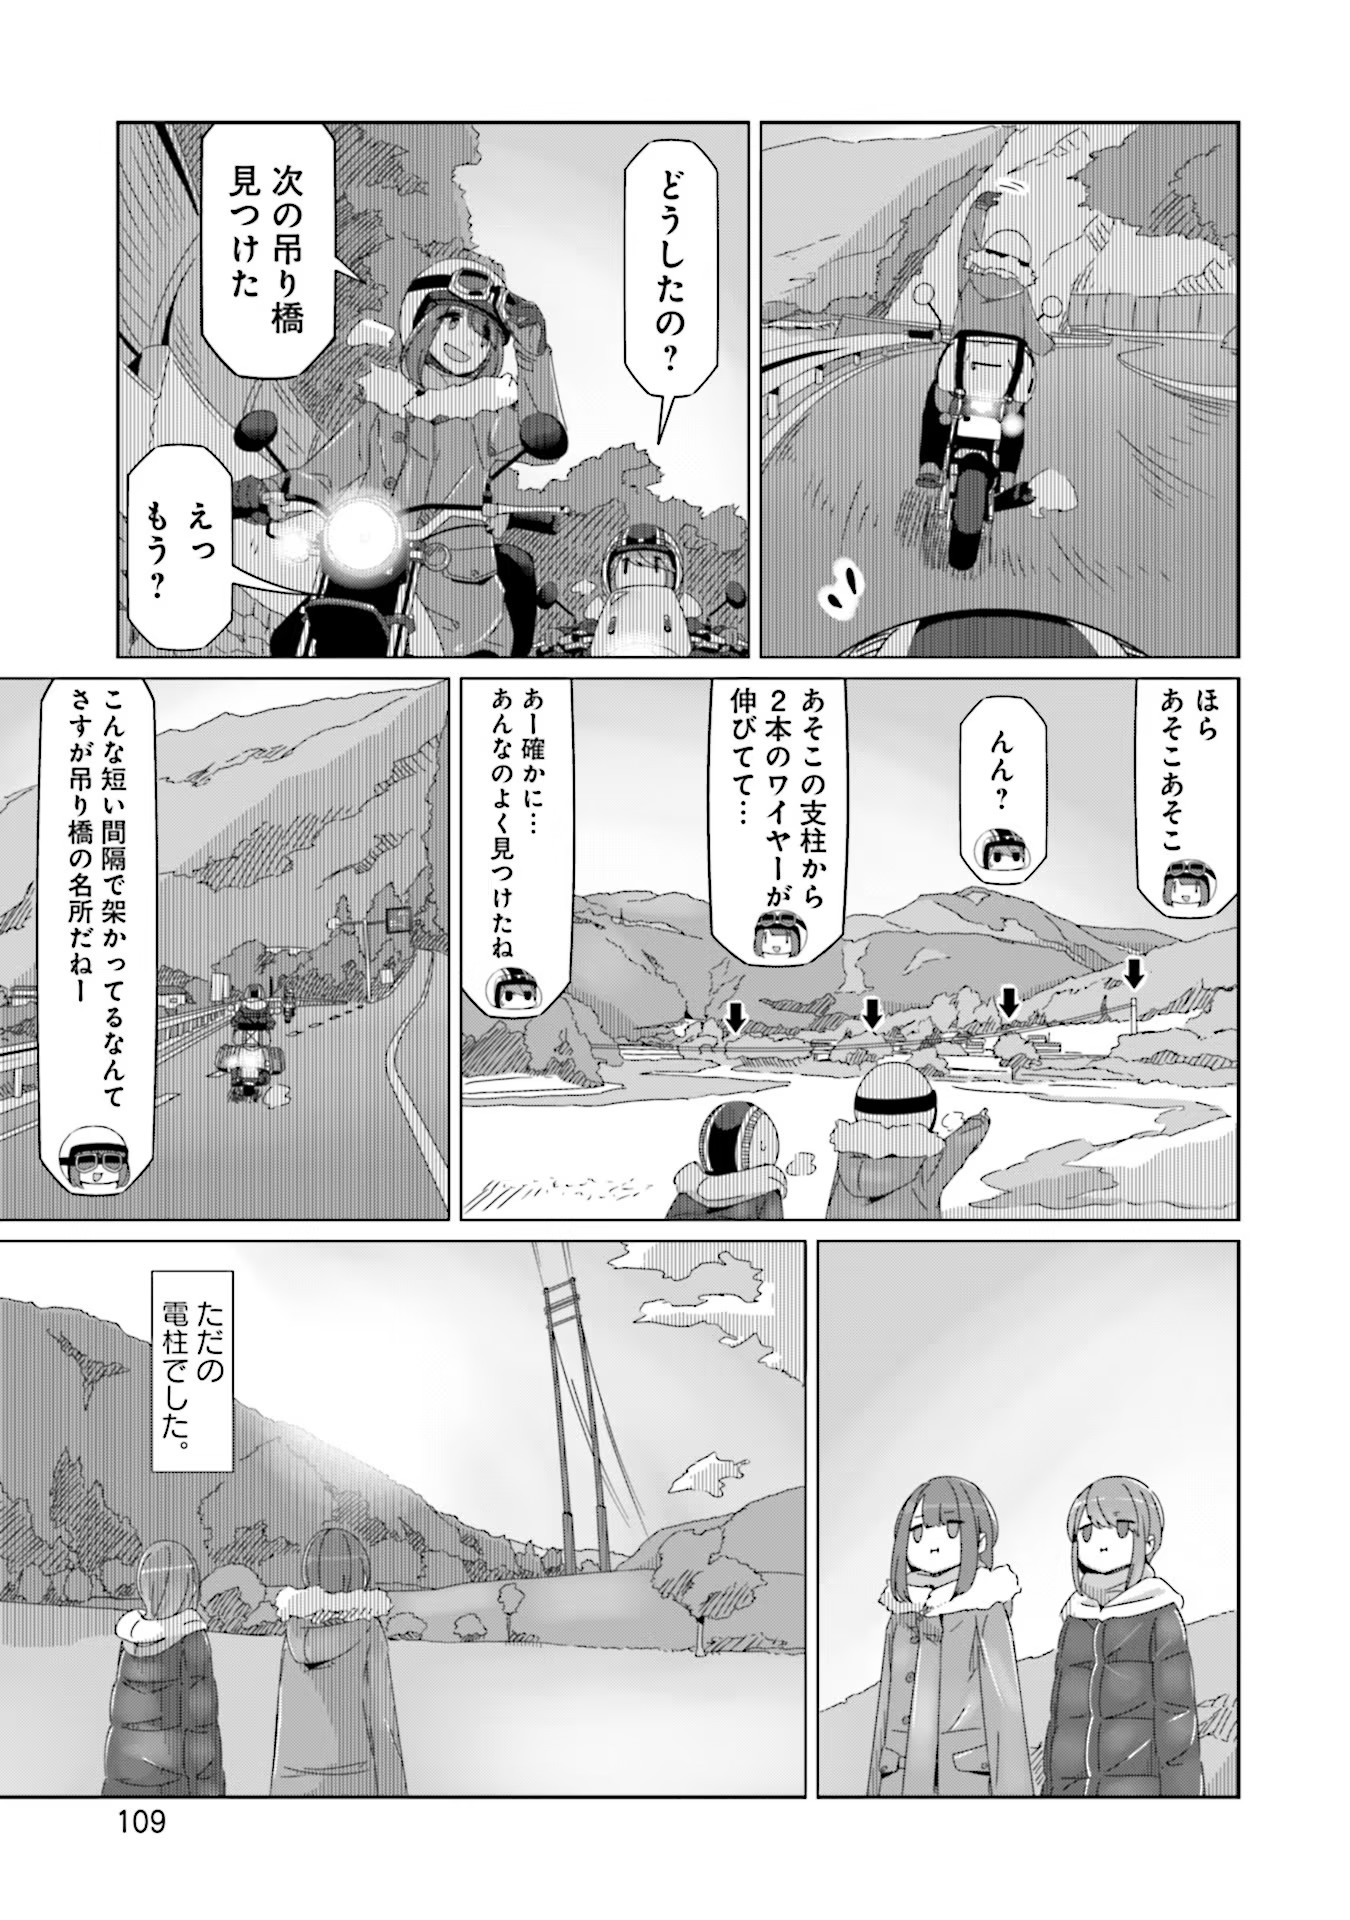 Yuru Camp - Chapter 57 - Page 3